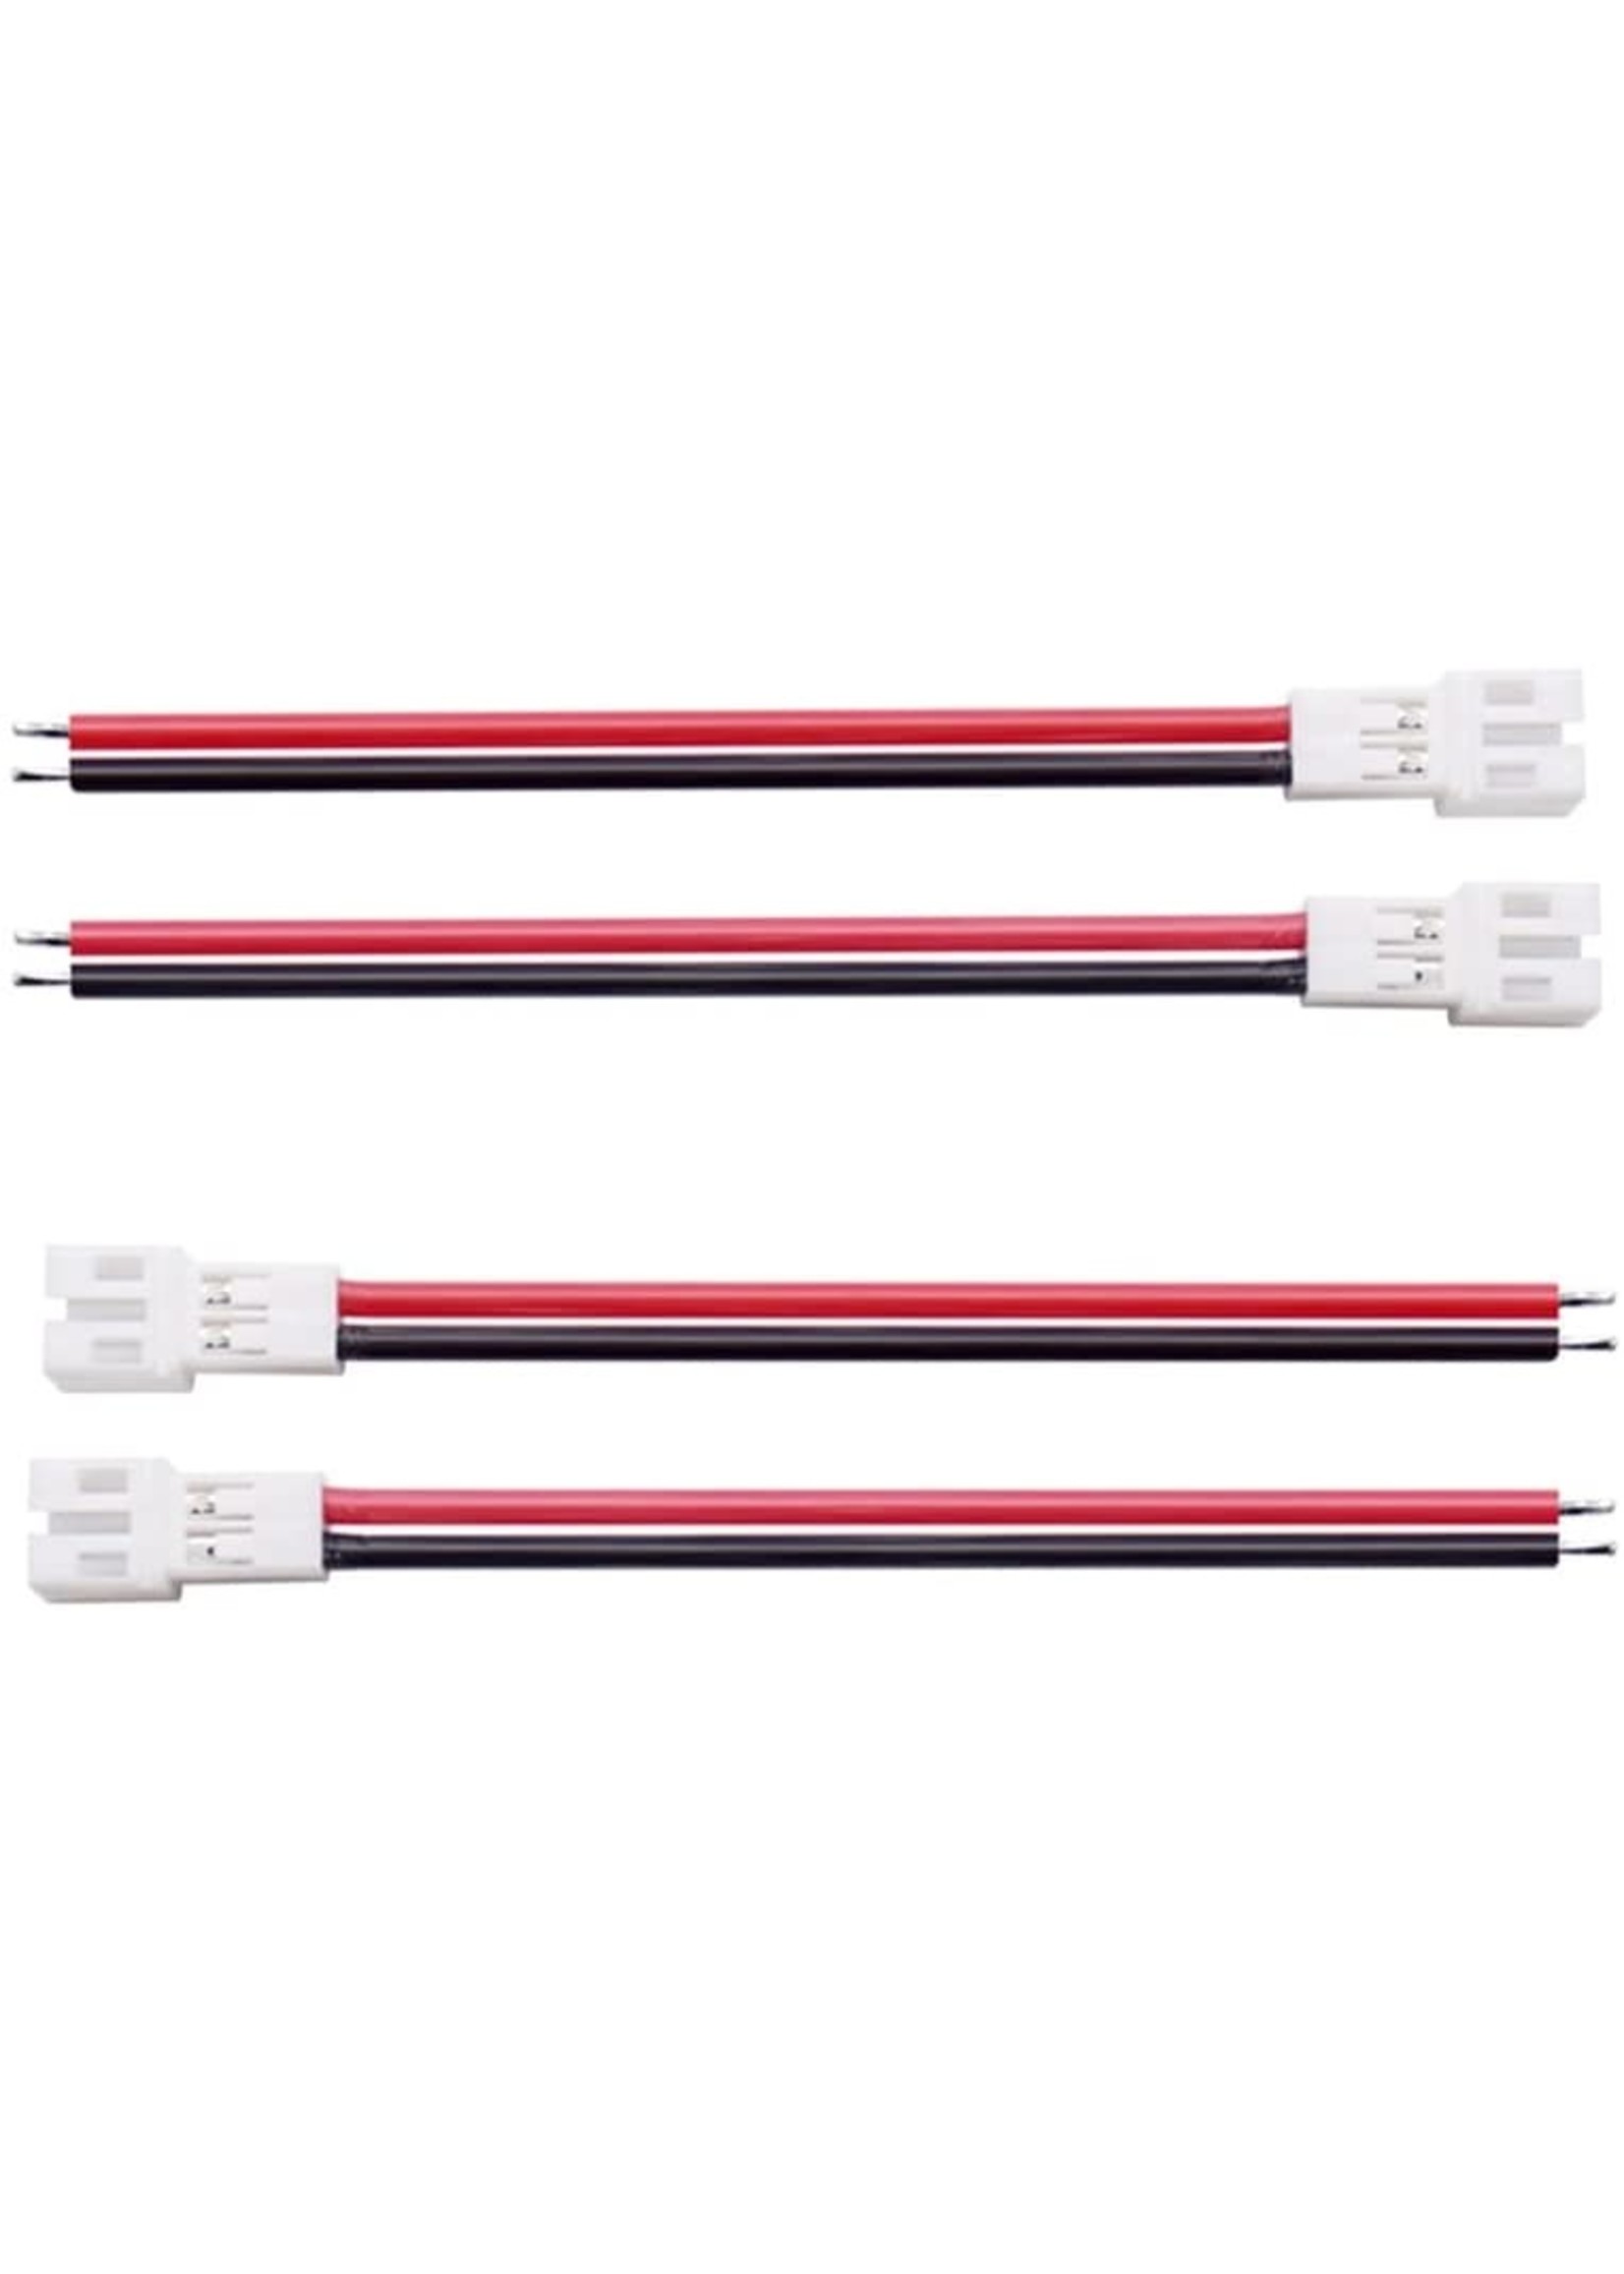 BetaFPV 312657 - JST-PH 2.0 Female Connector Cable Set (4)